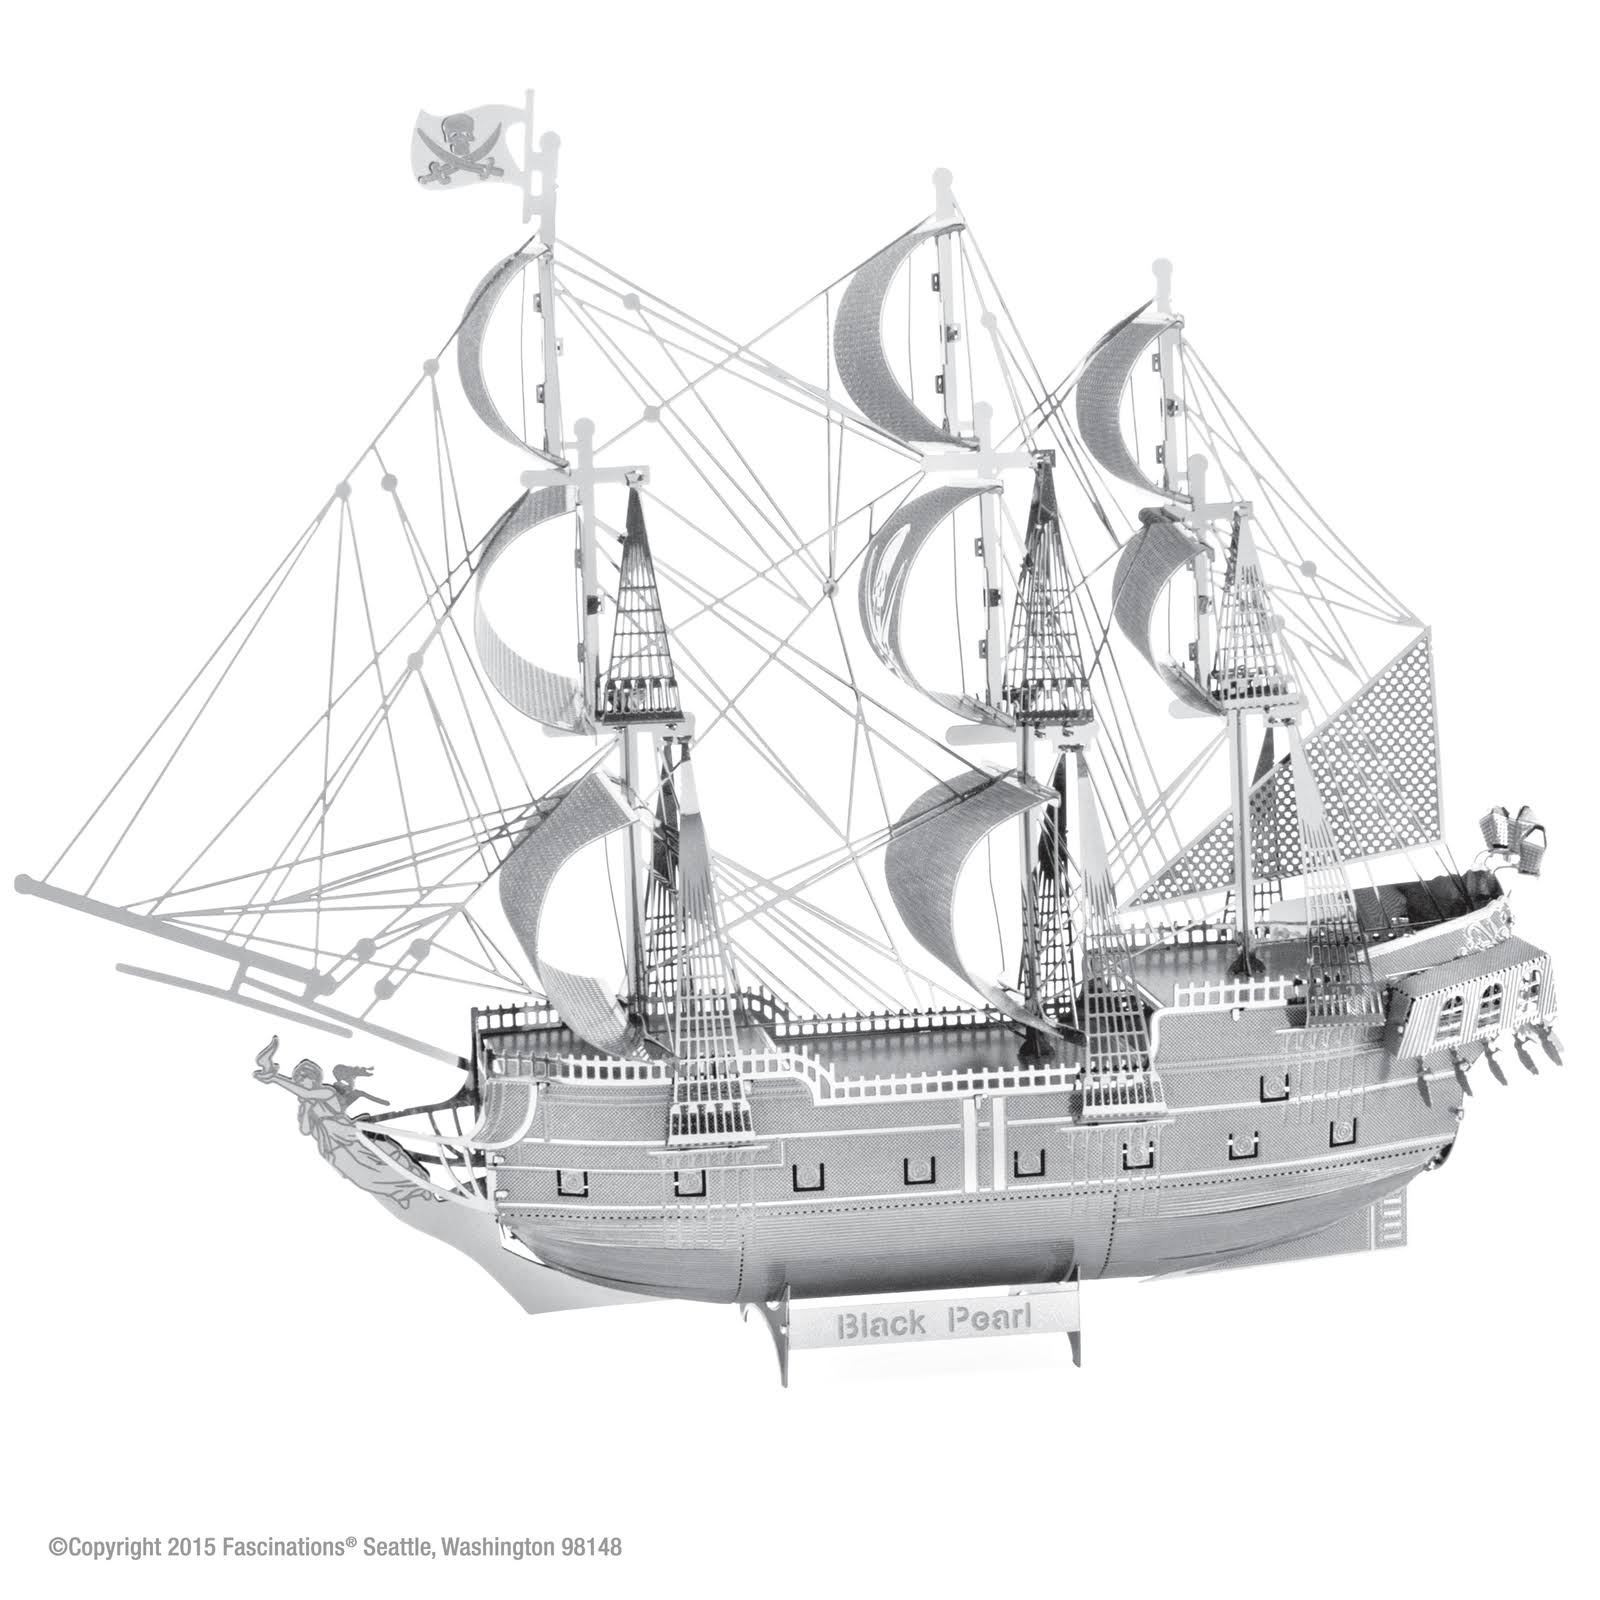 Iconx 3D Metal Model Kits - Black Pearl Ship